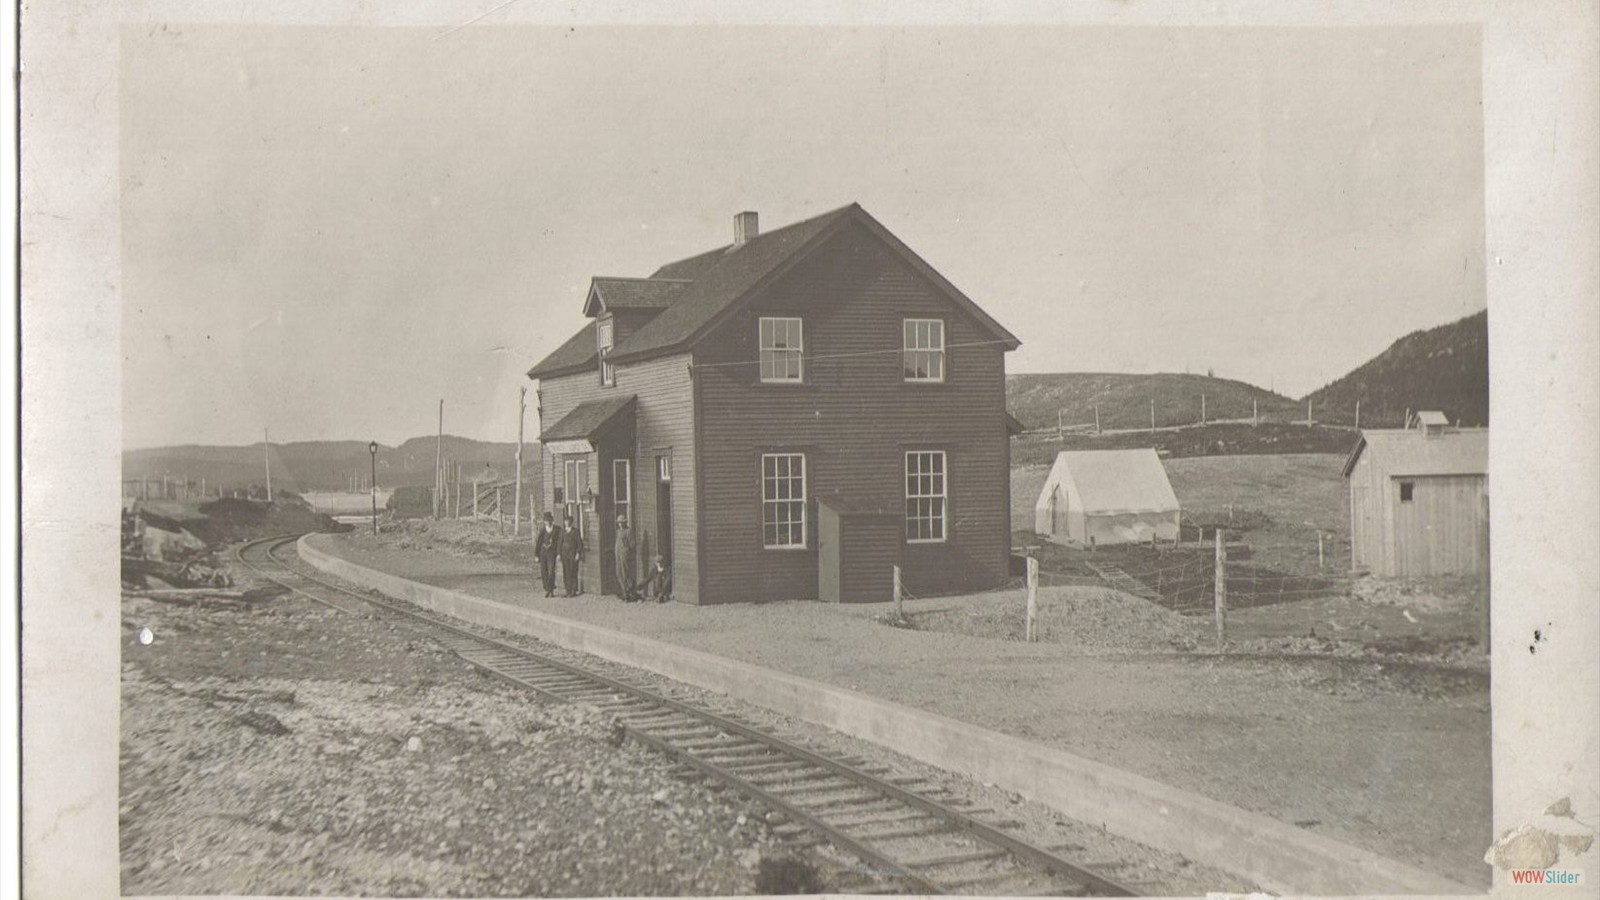 Trinity Railway Junction Station